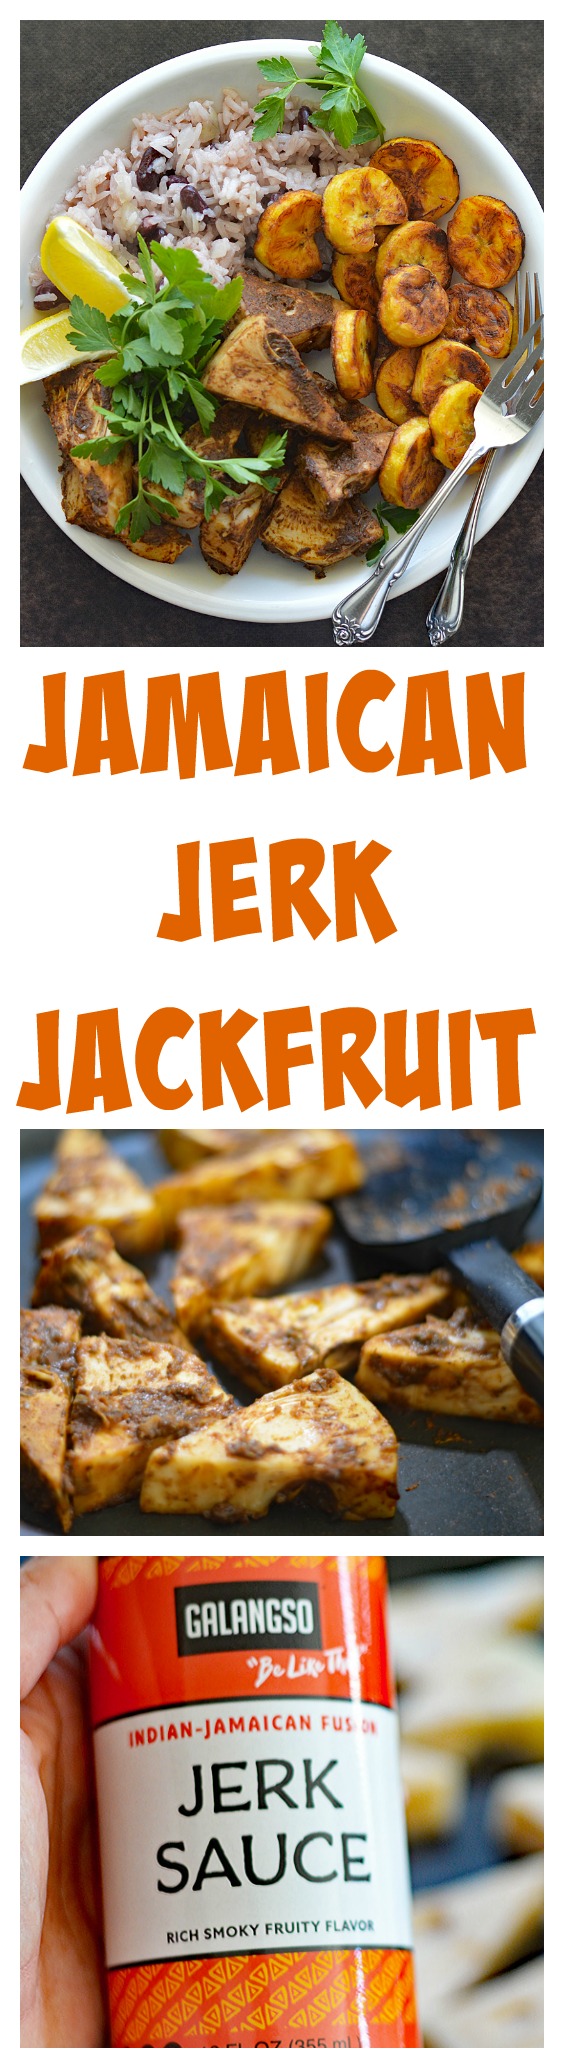 Jamaican Jerk Jackfruit with Rice and Beans